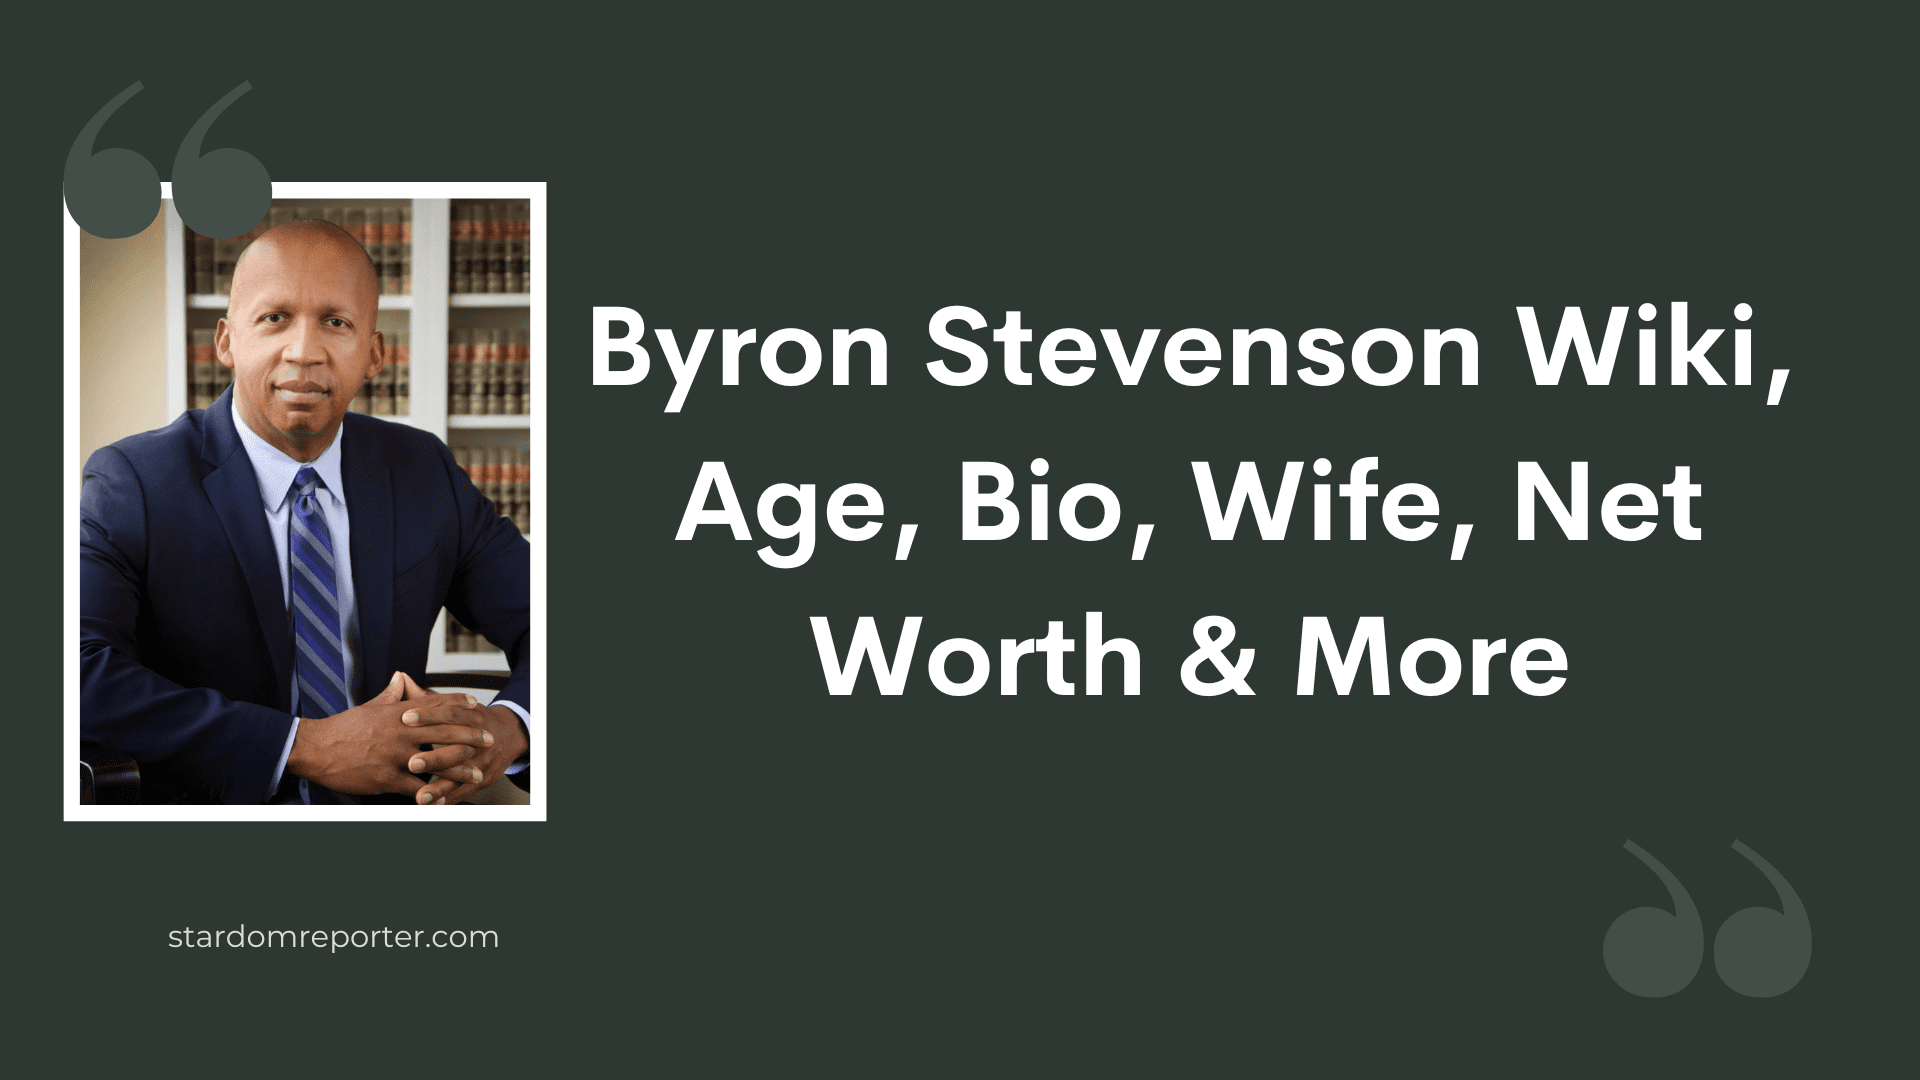 Byron Stevenson Wiki, Age, Bio, Wife, Net Worth & More - 43